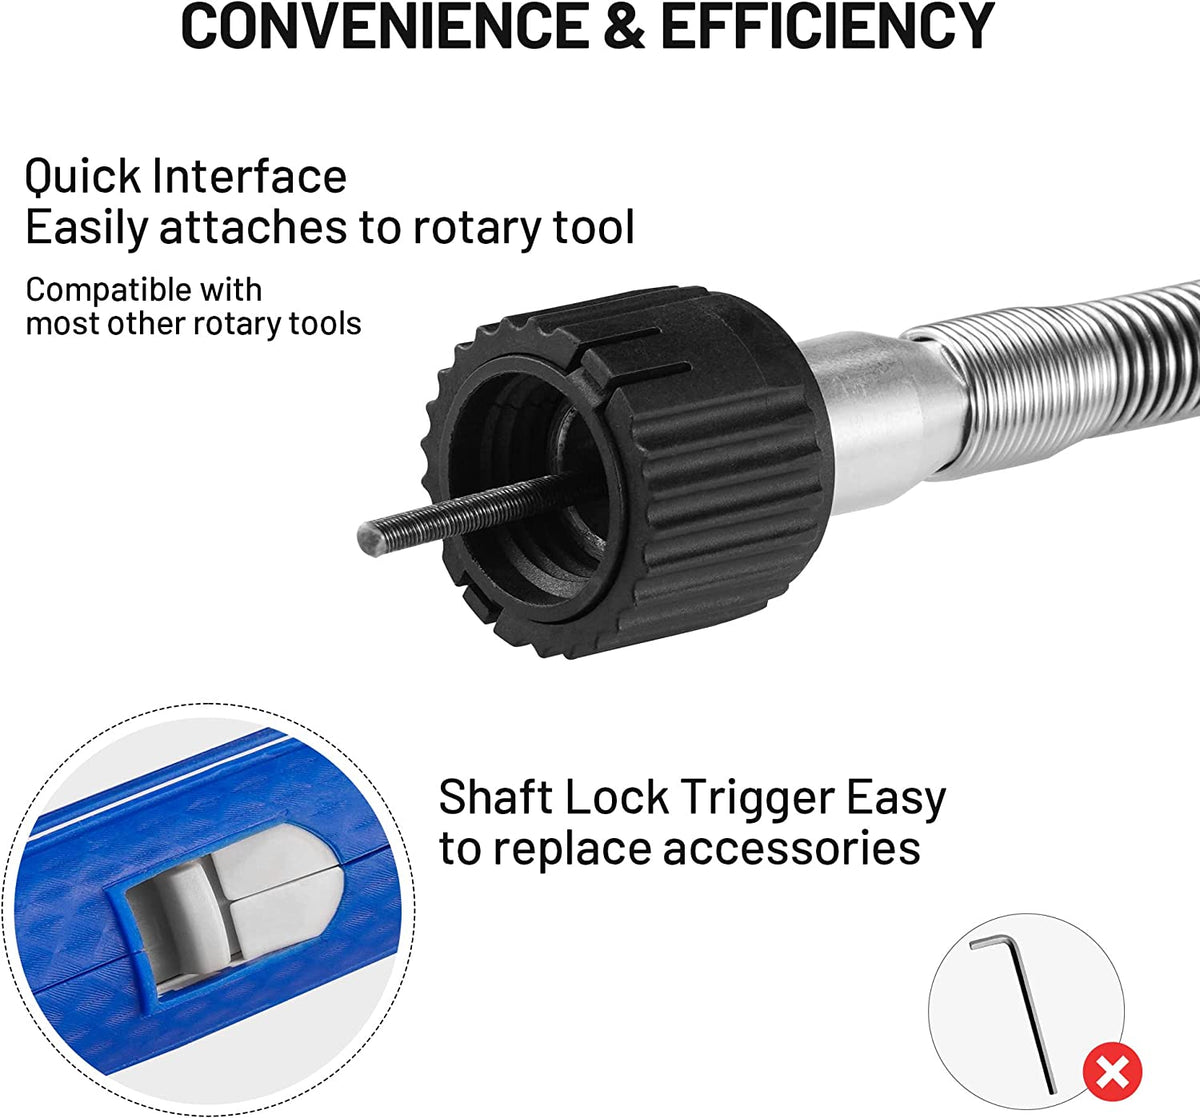 APEXFORGE M6 Pro 200W Rotary Tool Kit, Precision Speed Adjustment Per